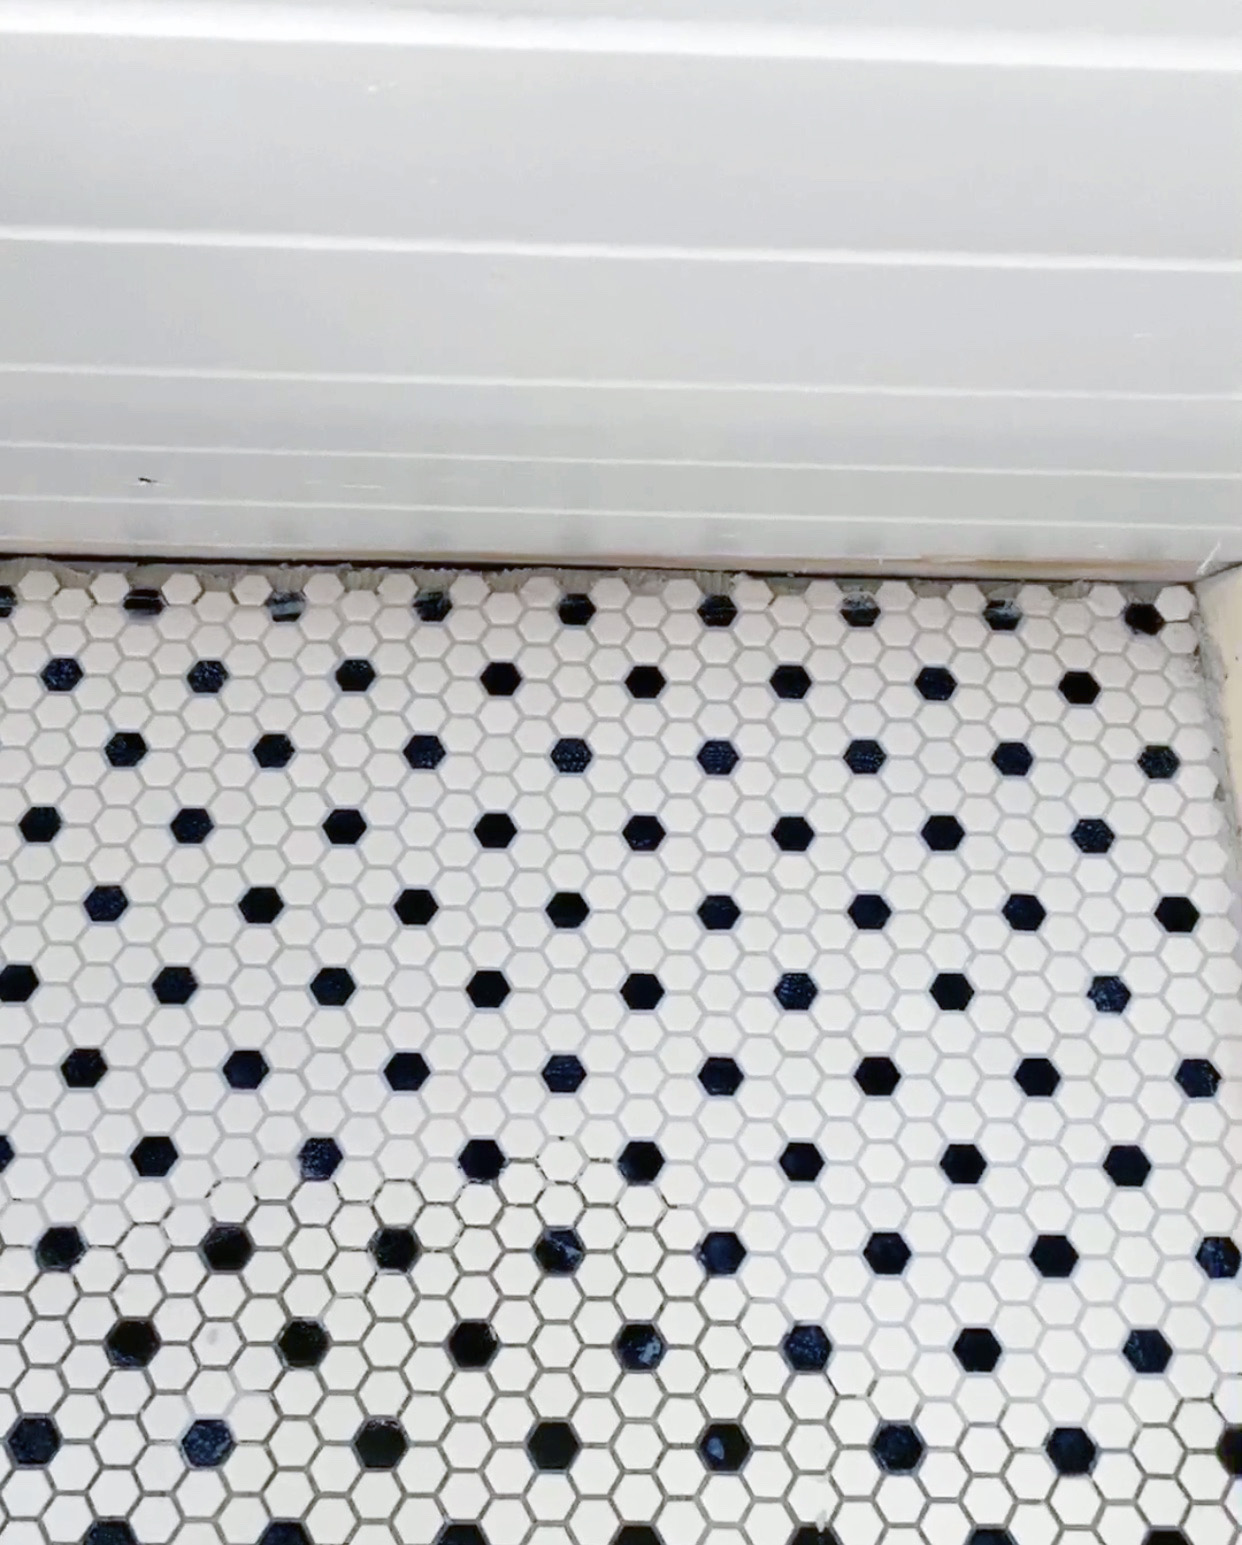 Aframe loft bathroom floor and painted walls